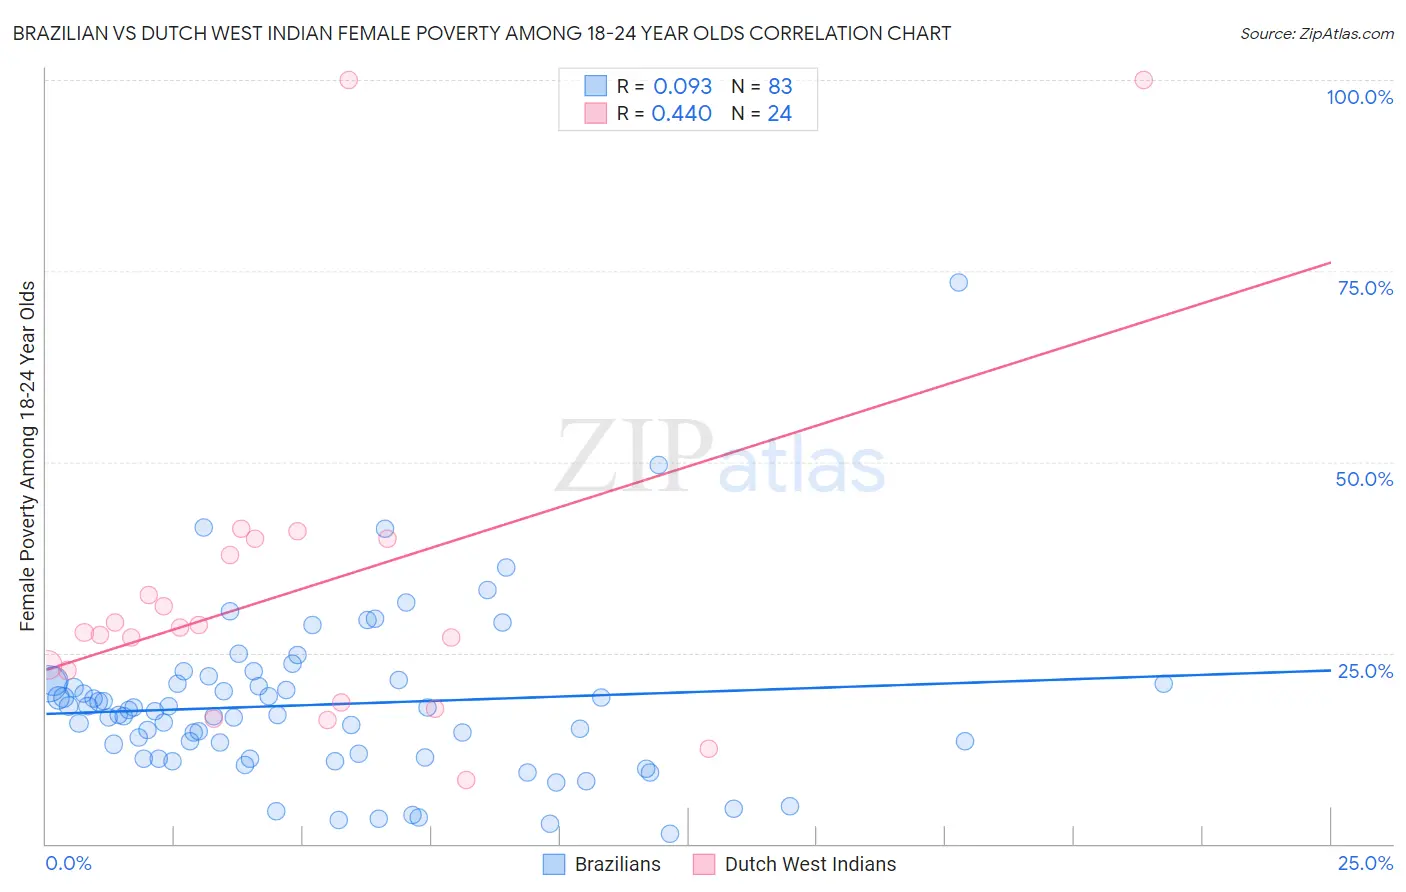 Brazilian vs Dutch West Indian Female Poverty Among 18-24 Year Olds